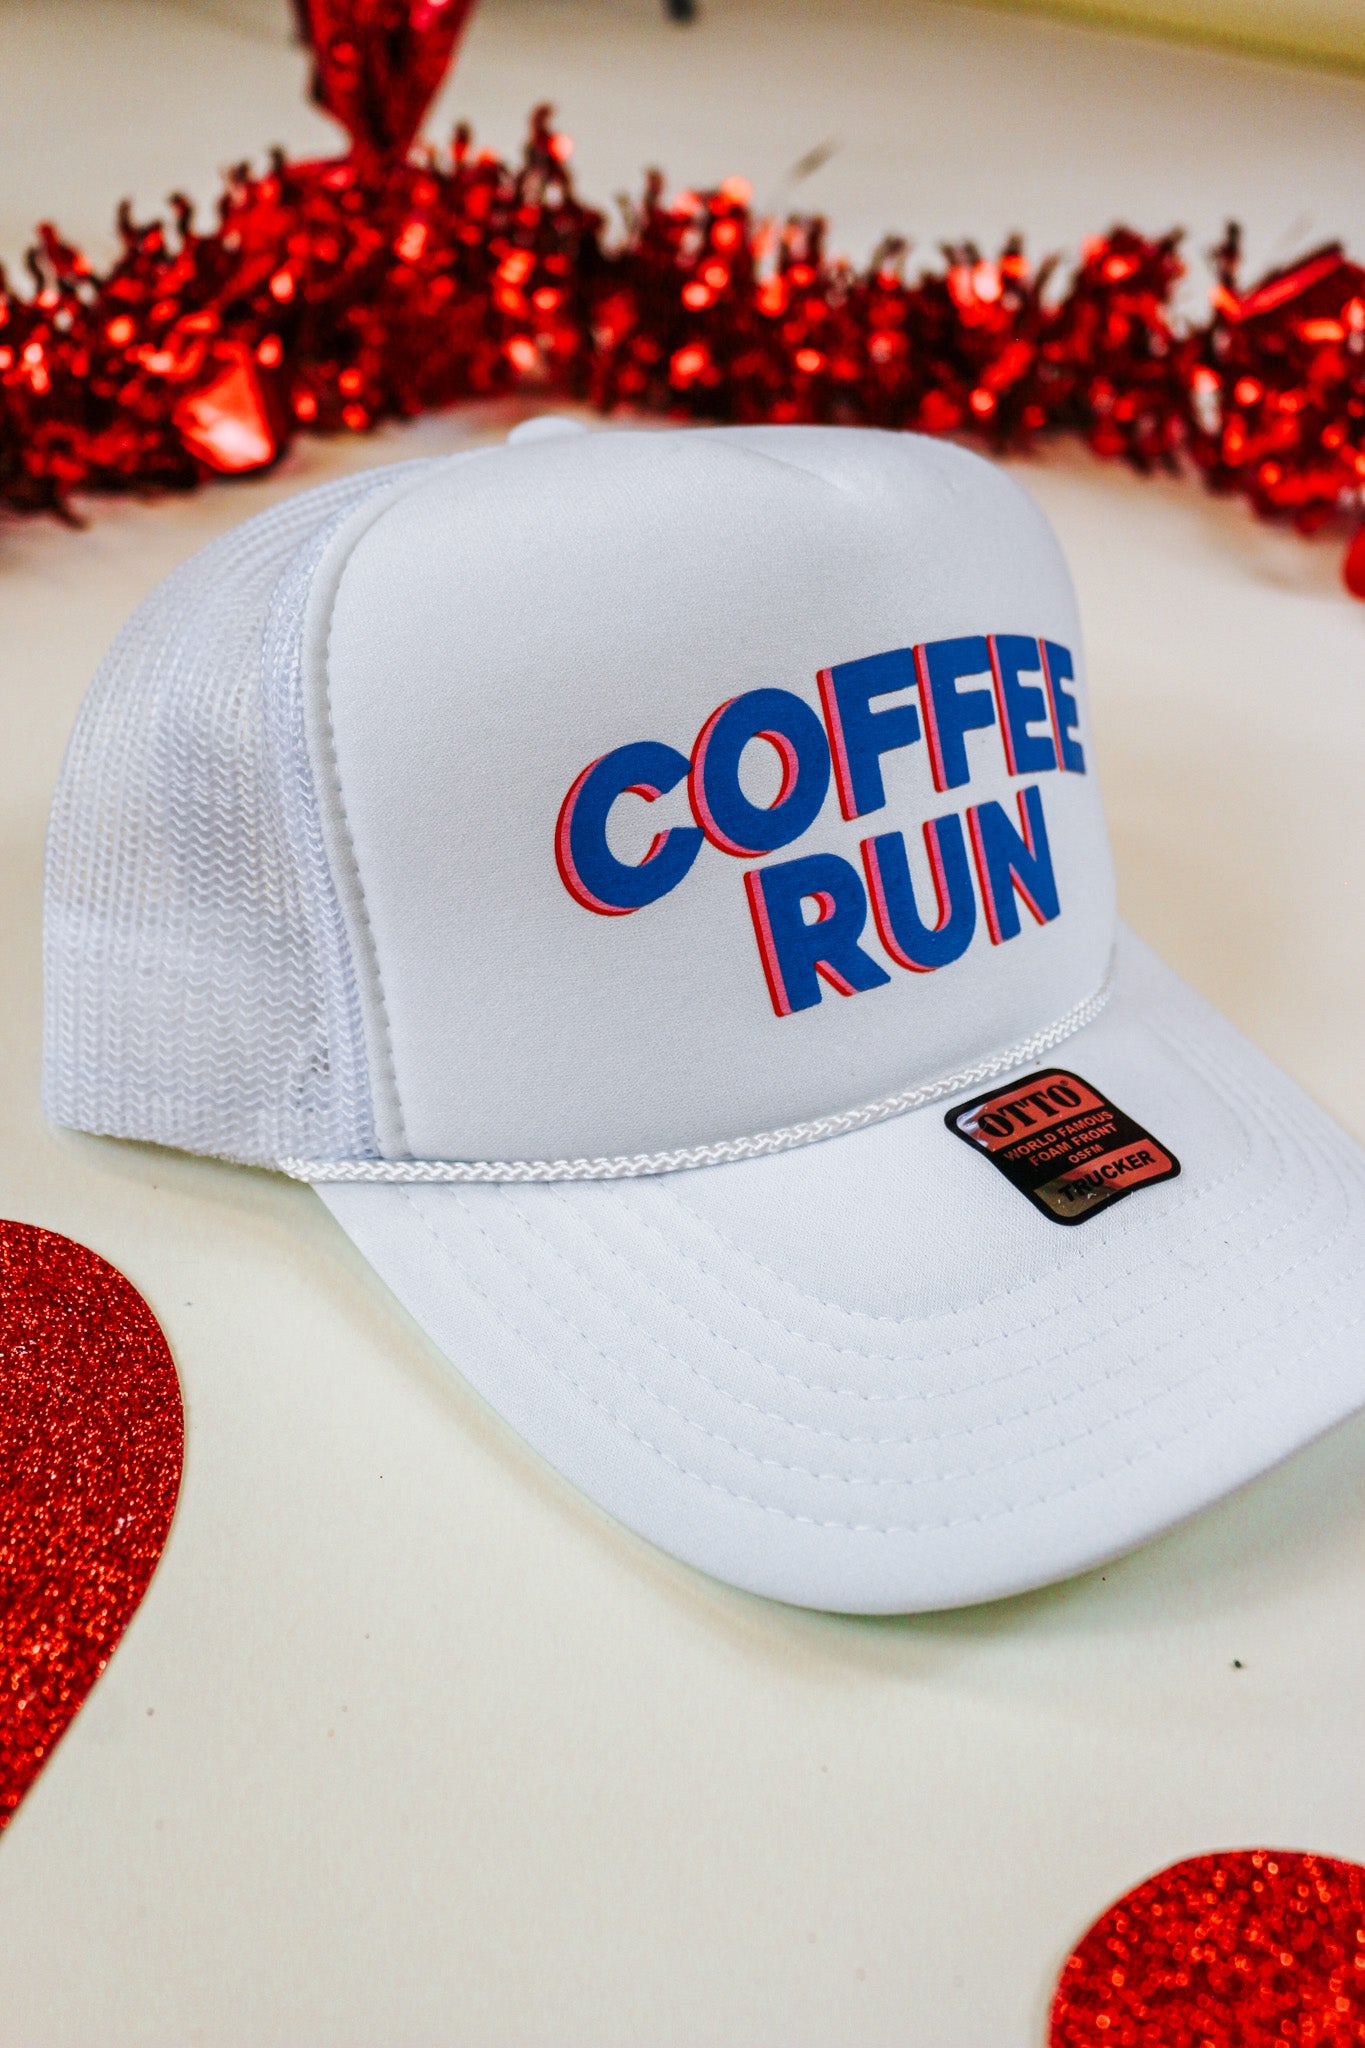 Coffee Run White Trucker Hat